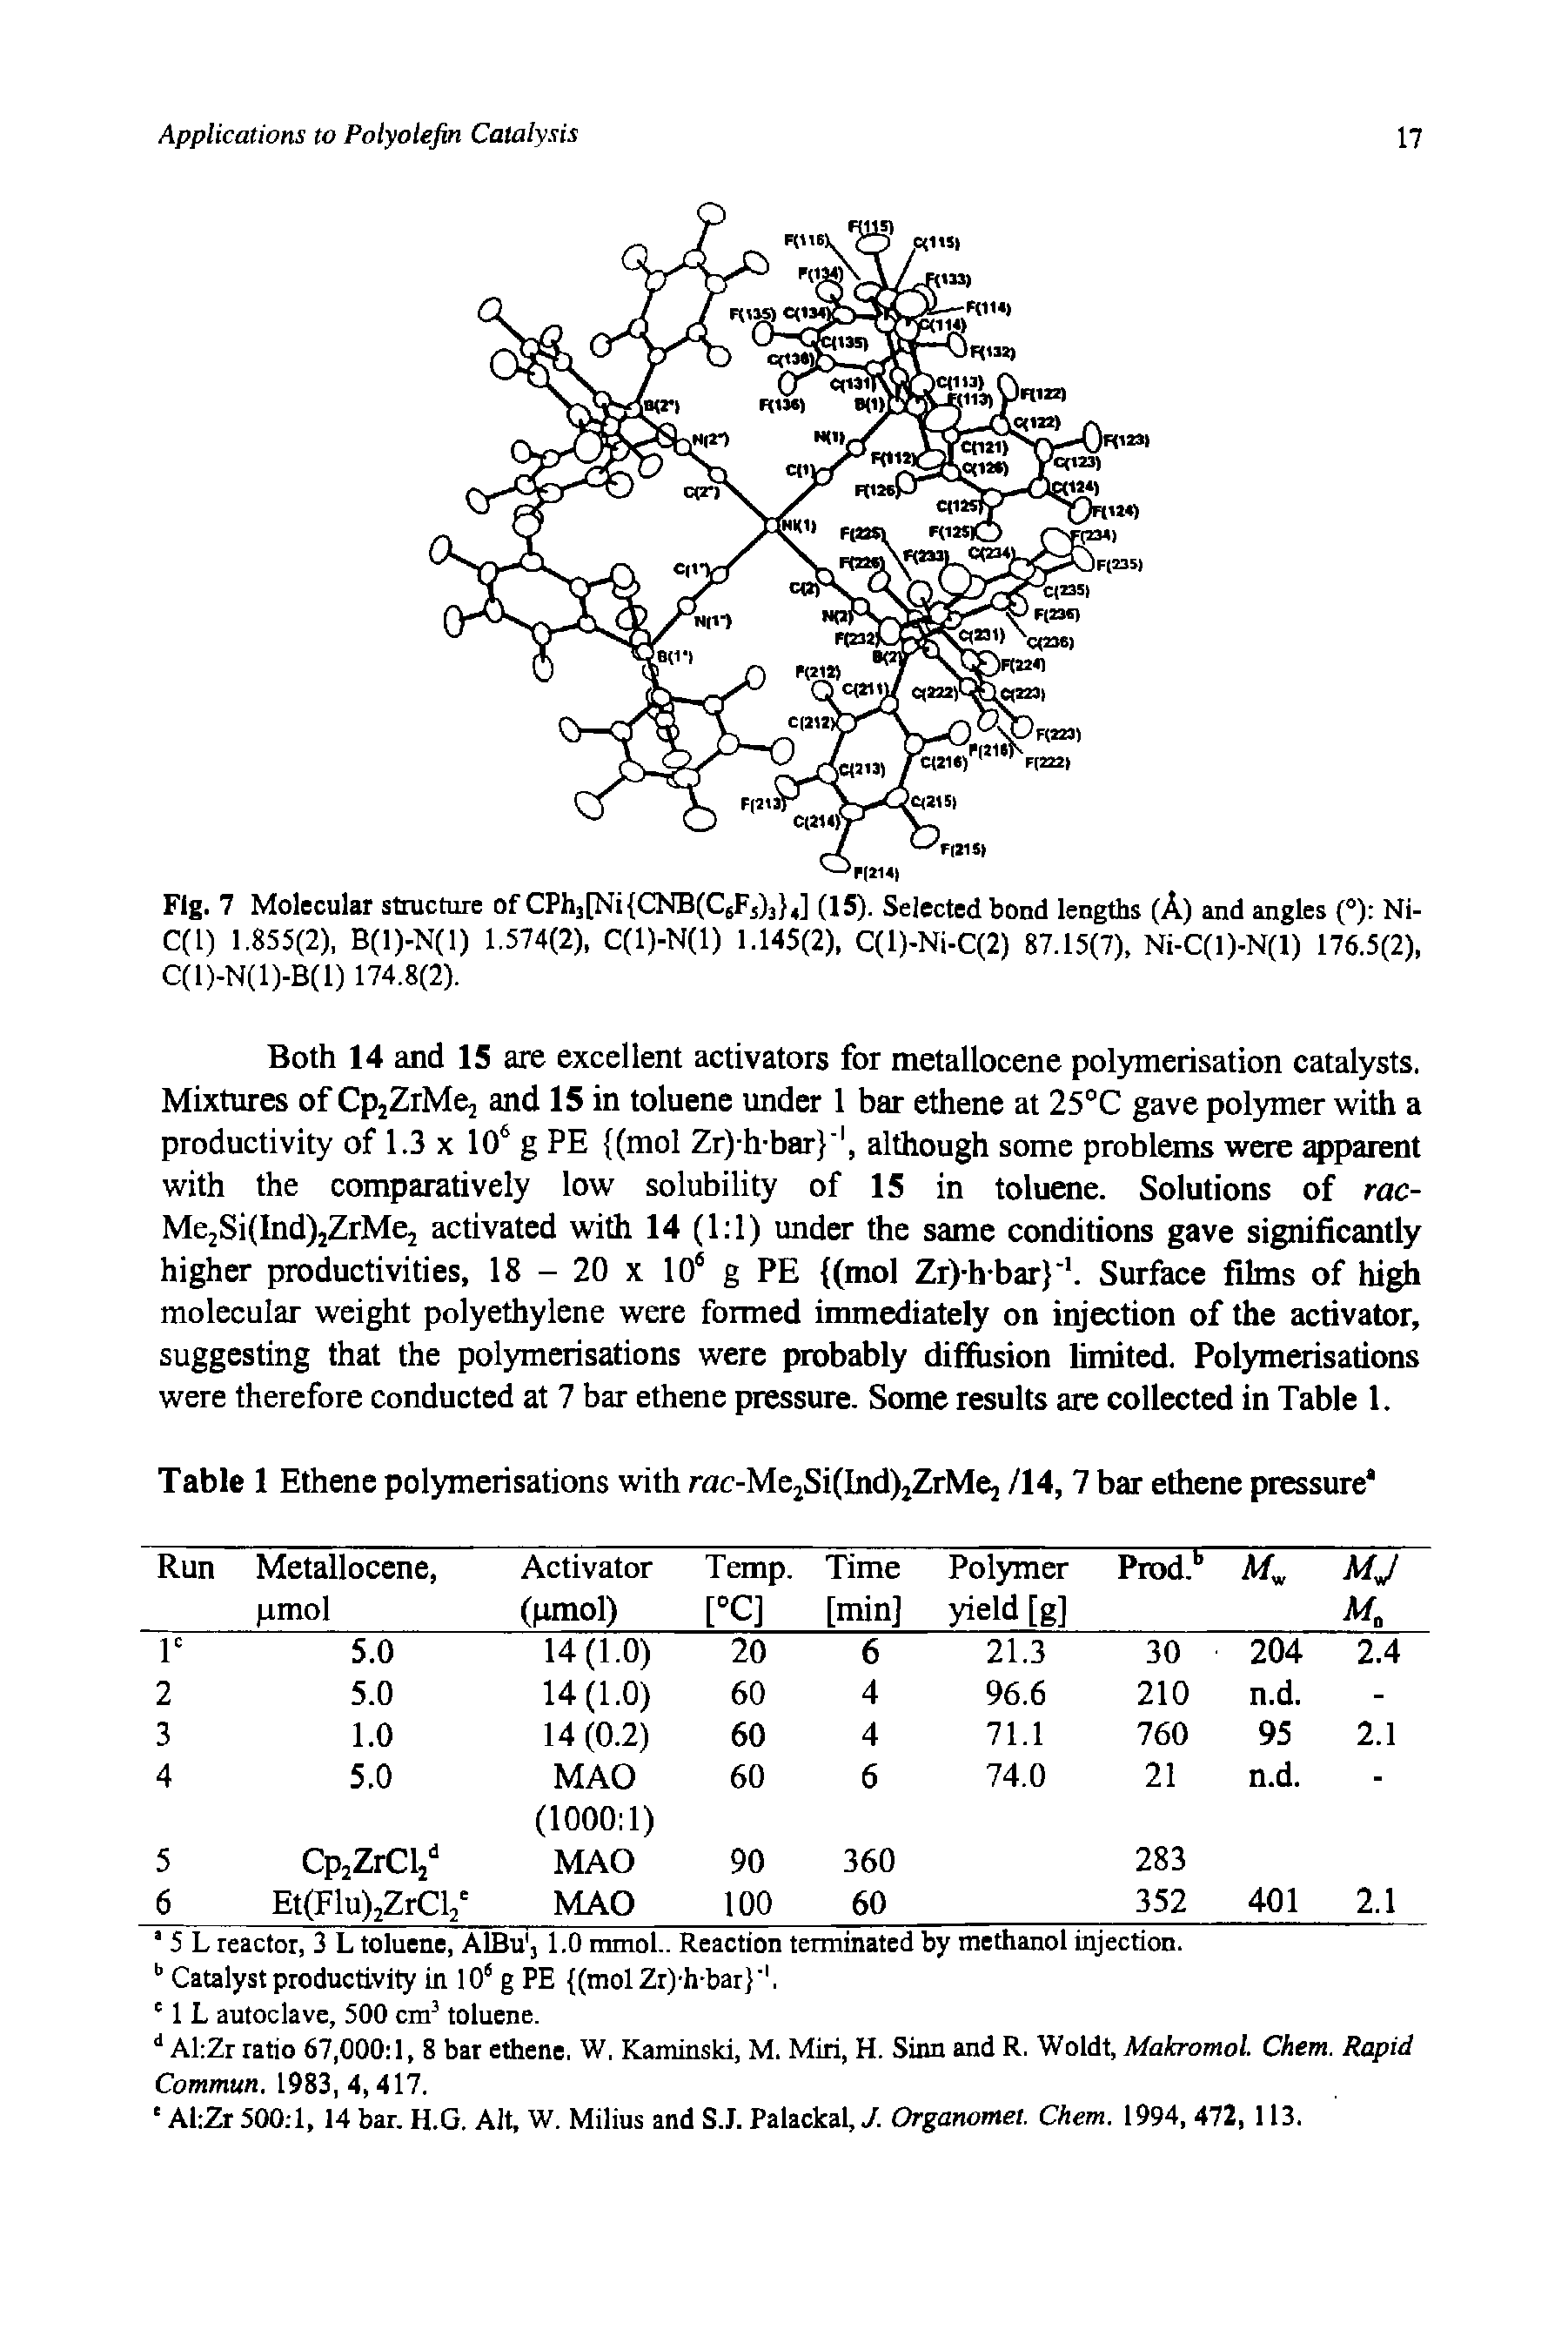 Table 1 Ethene polymerisations with rac-Me2Si(Ind)2ZrMej 714, 7 bar ethene pressure ...